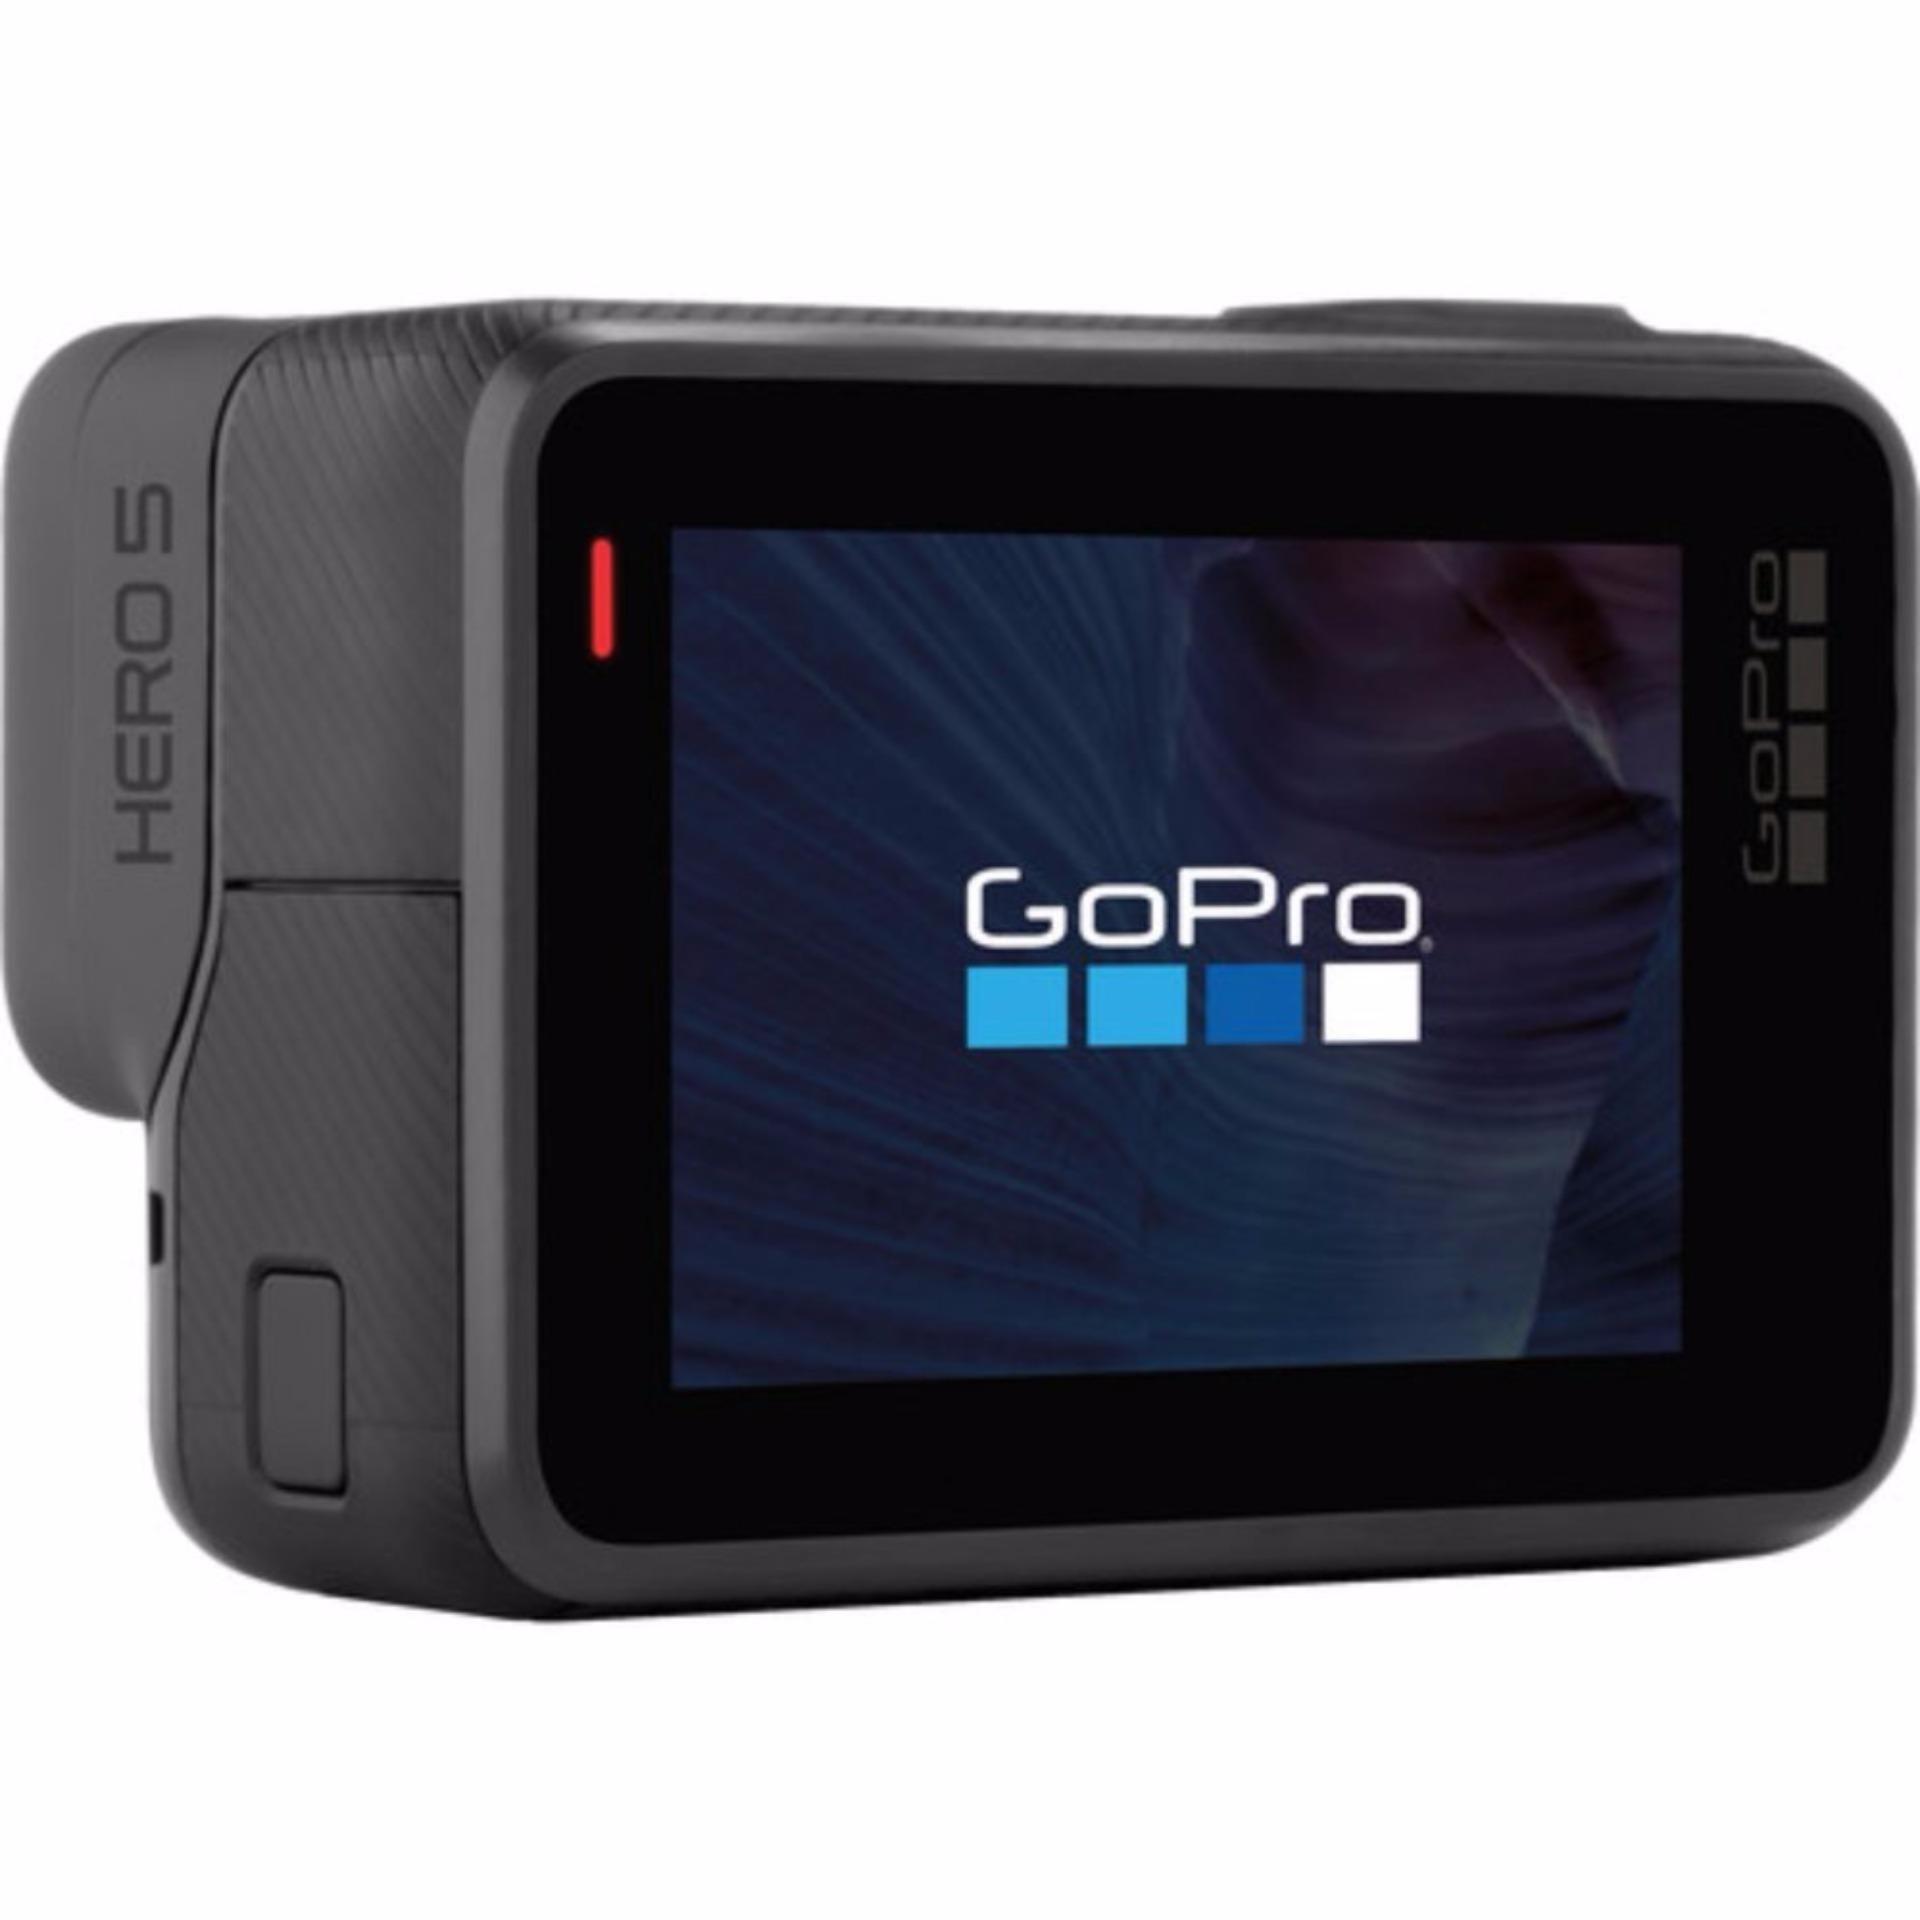 GoPro Hero 5 Black (1year International and Local Warranty)(Local Distributor)